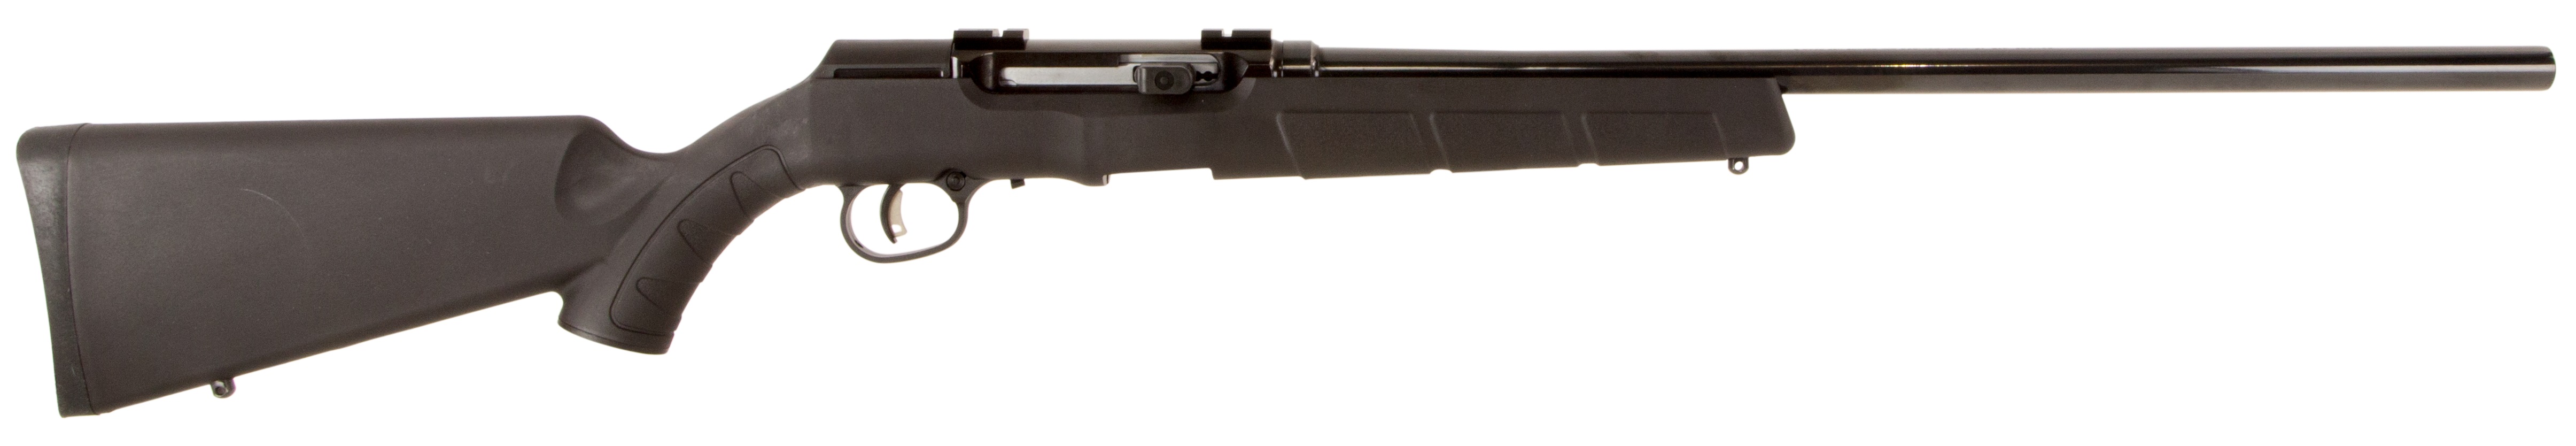 Savage Arms A17 17 Hmr 22 10rd Semi Auto Rifle Black Kygunco